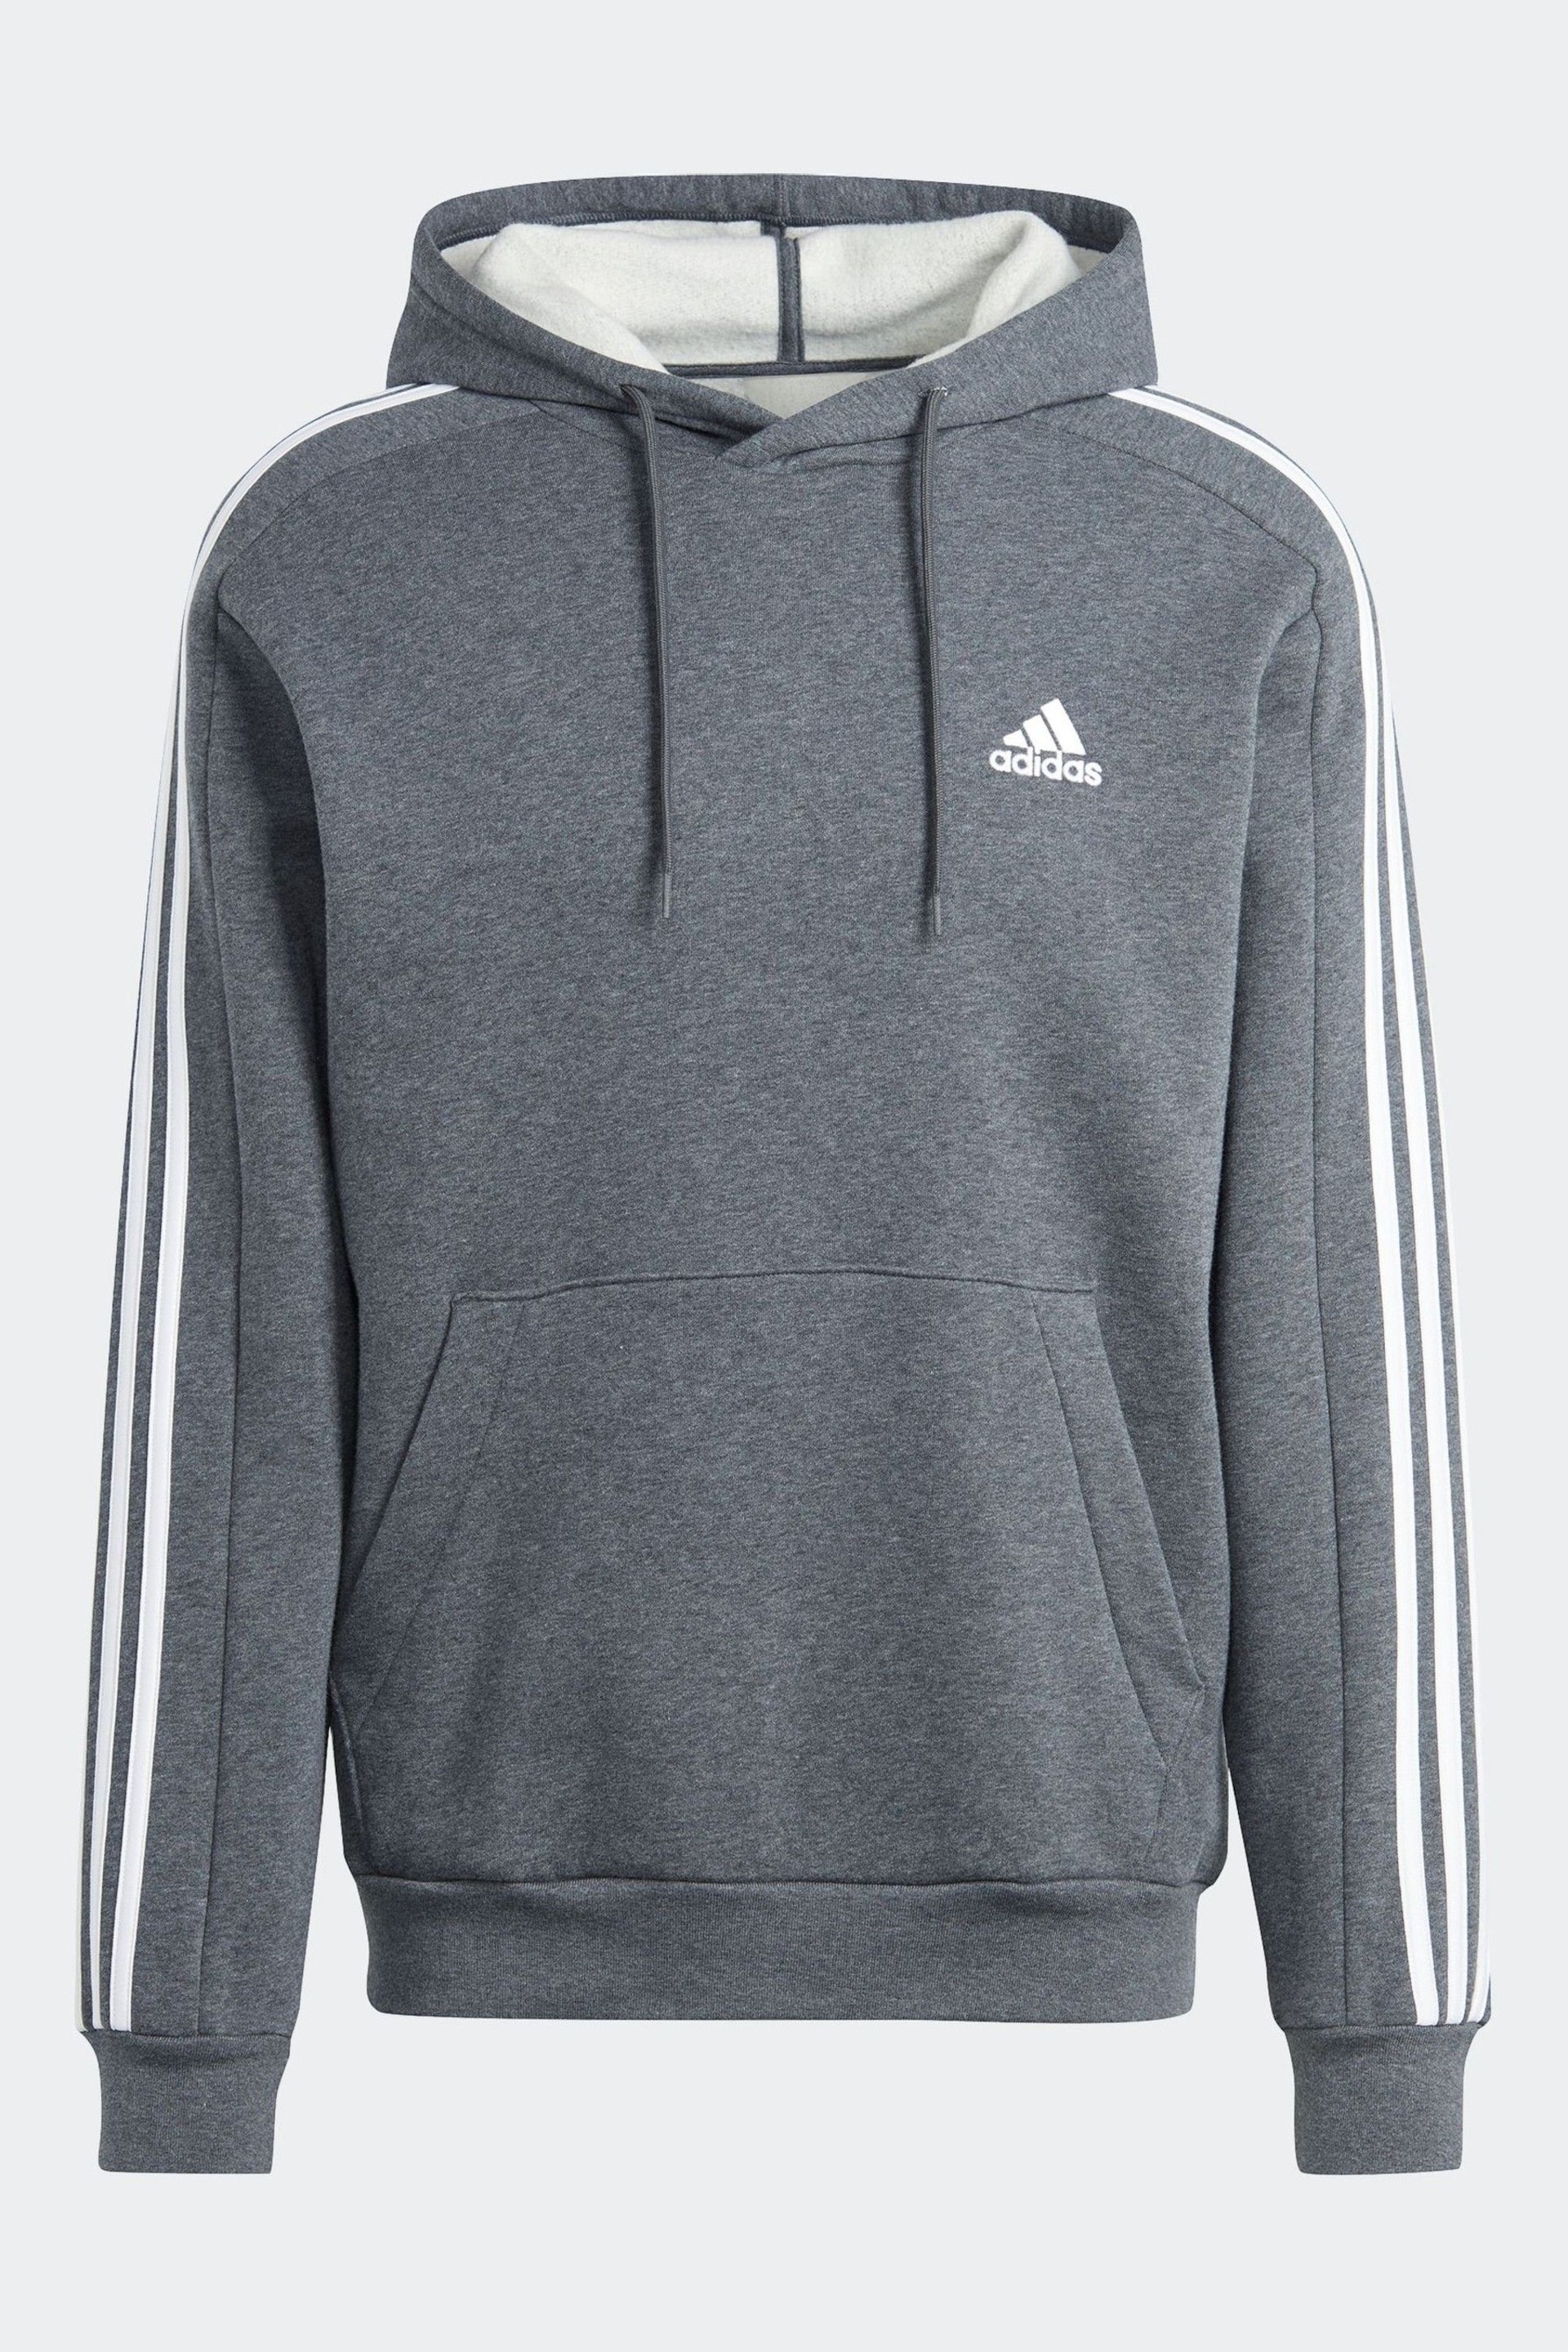 adidas Grey Essentials Fleece 3-Stripes Hoodie - Image 5 of 5